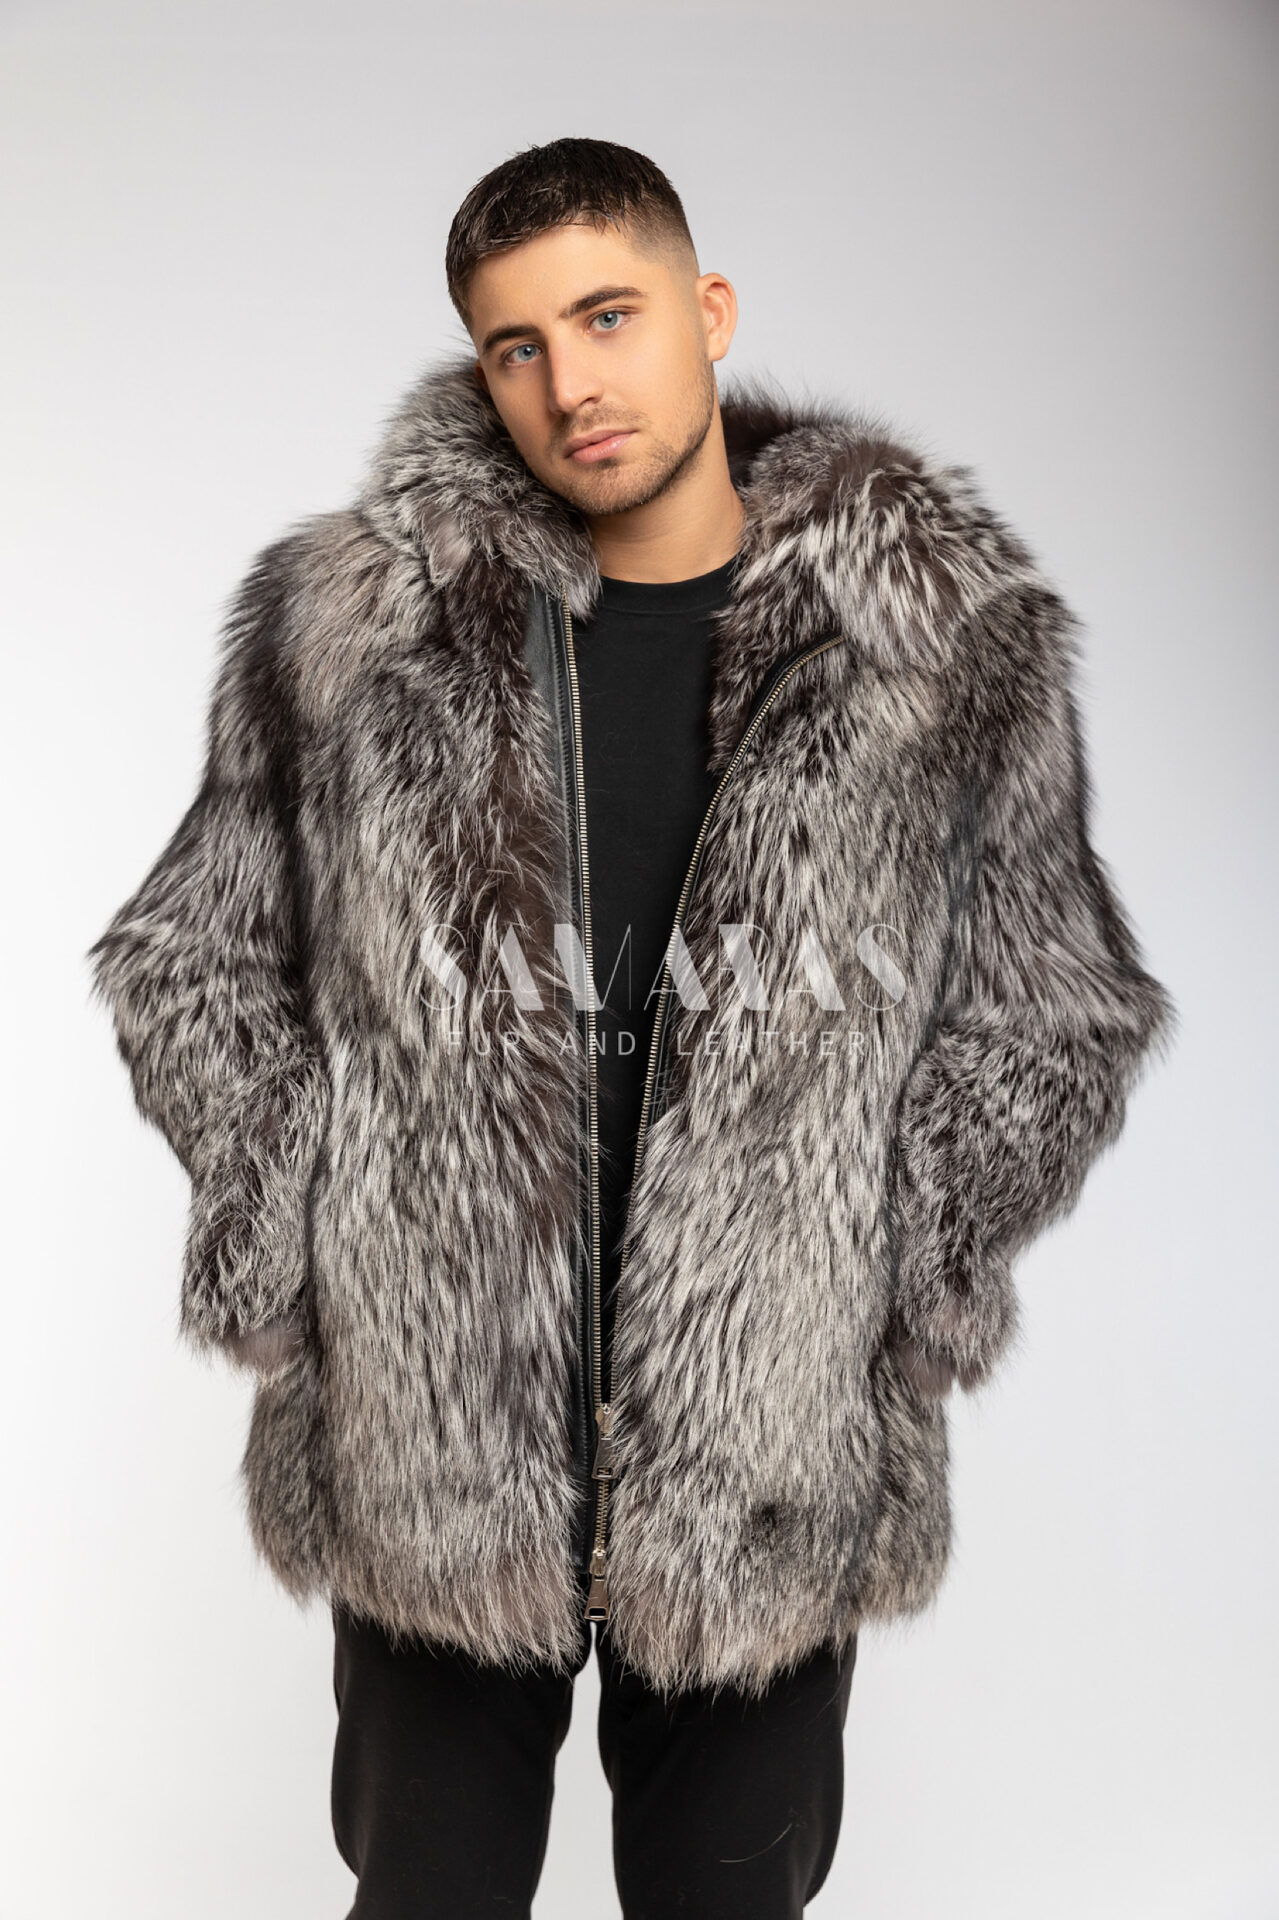 Men's Fur: Luxury Jackets, Coats, Hats & More - Samarasfurs.com